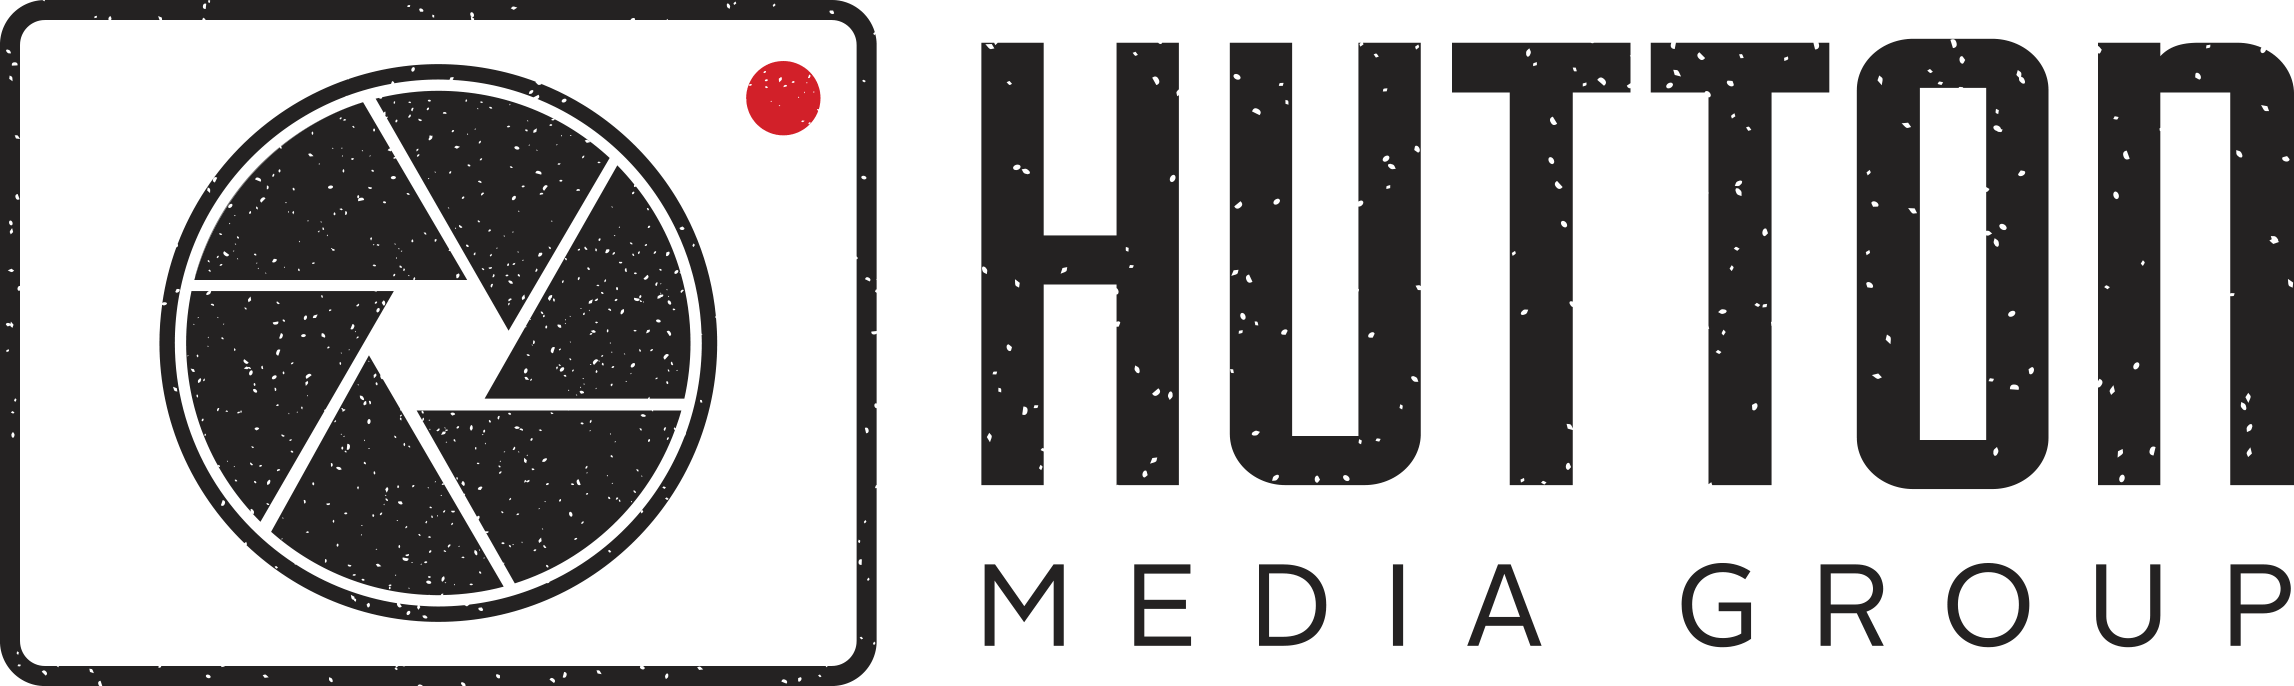 Hutton Media Group